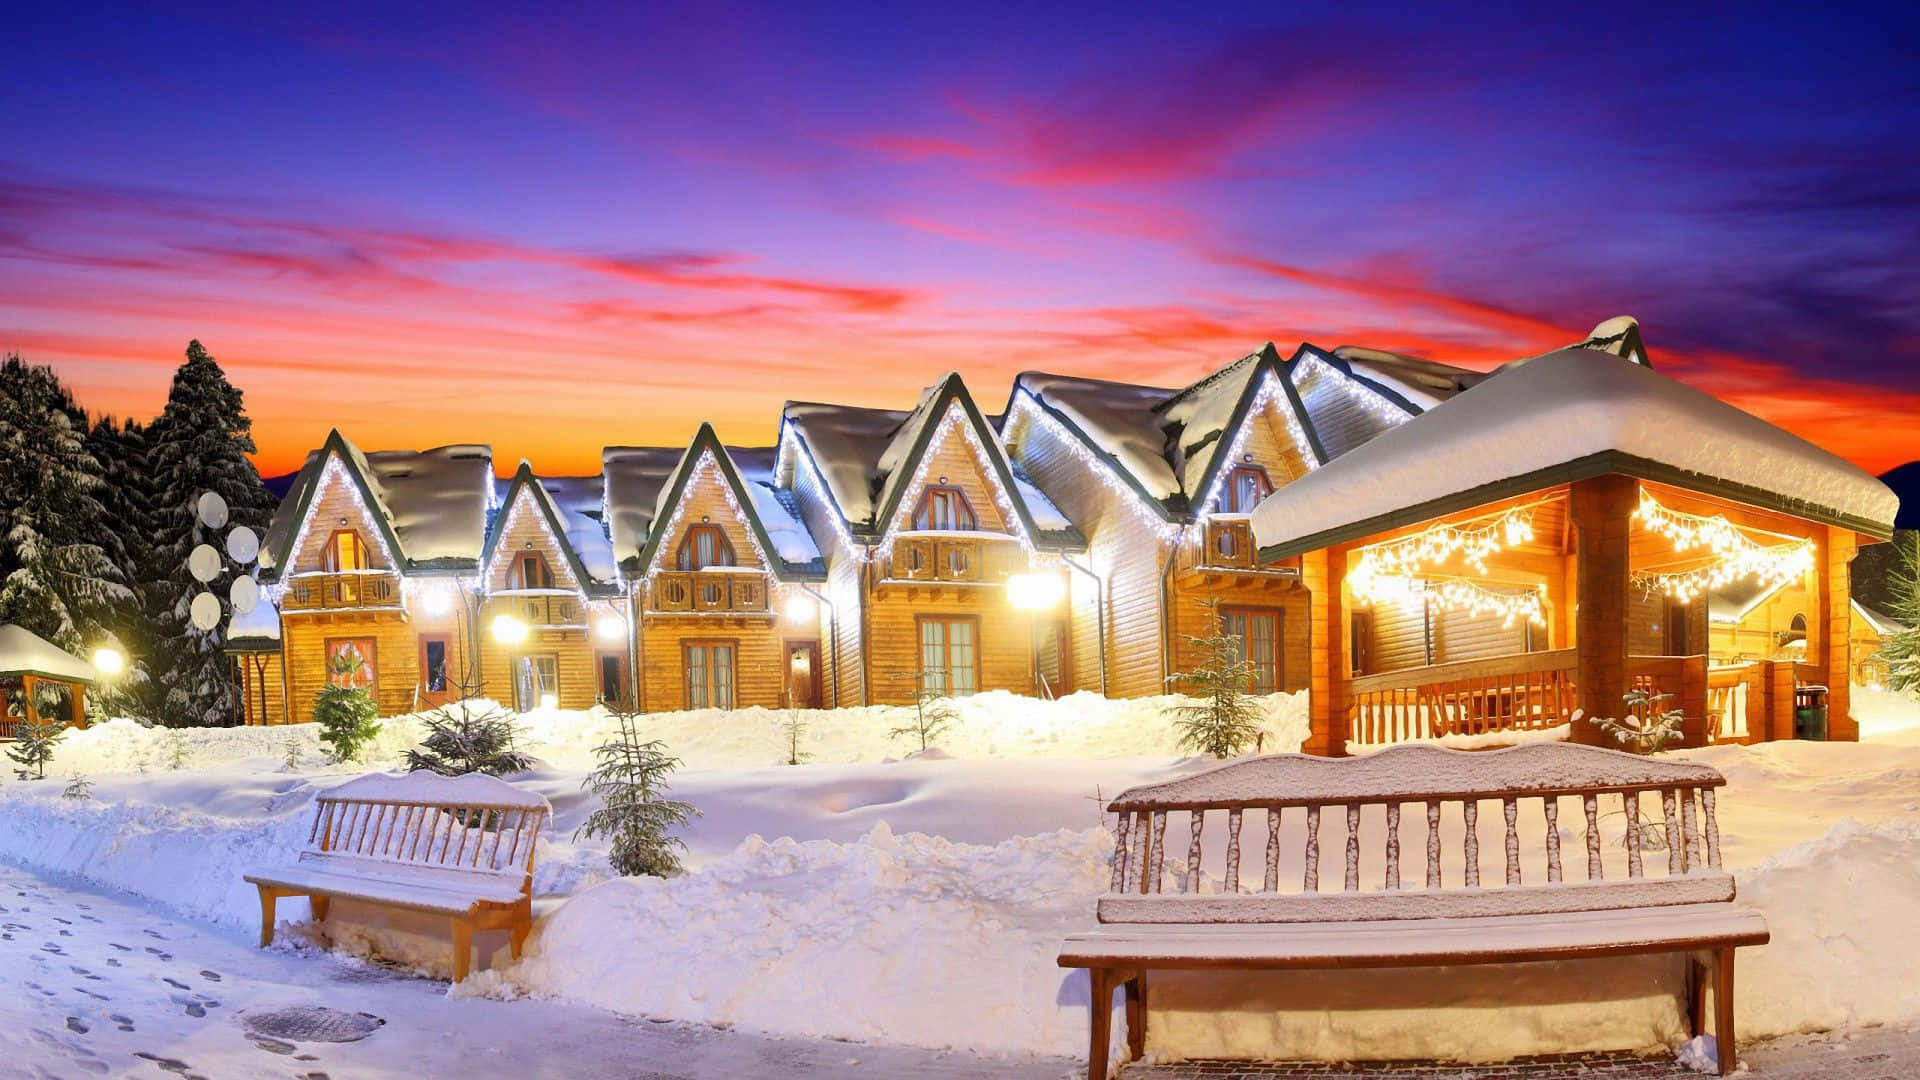 Picturesque Snowy Village Scene Wallpaper